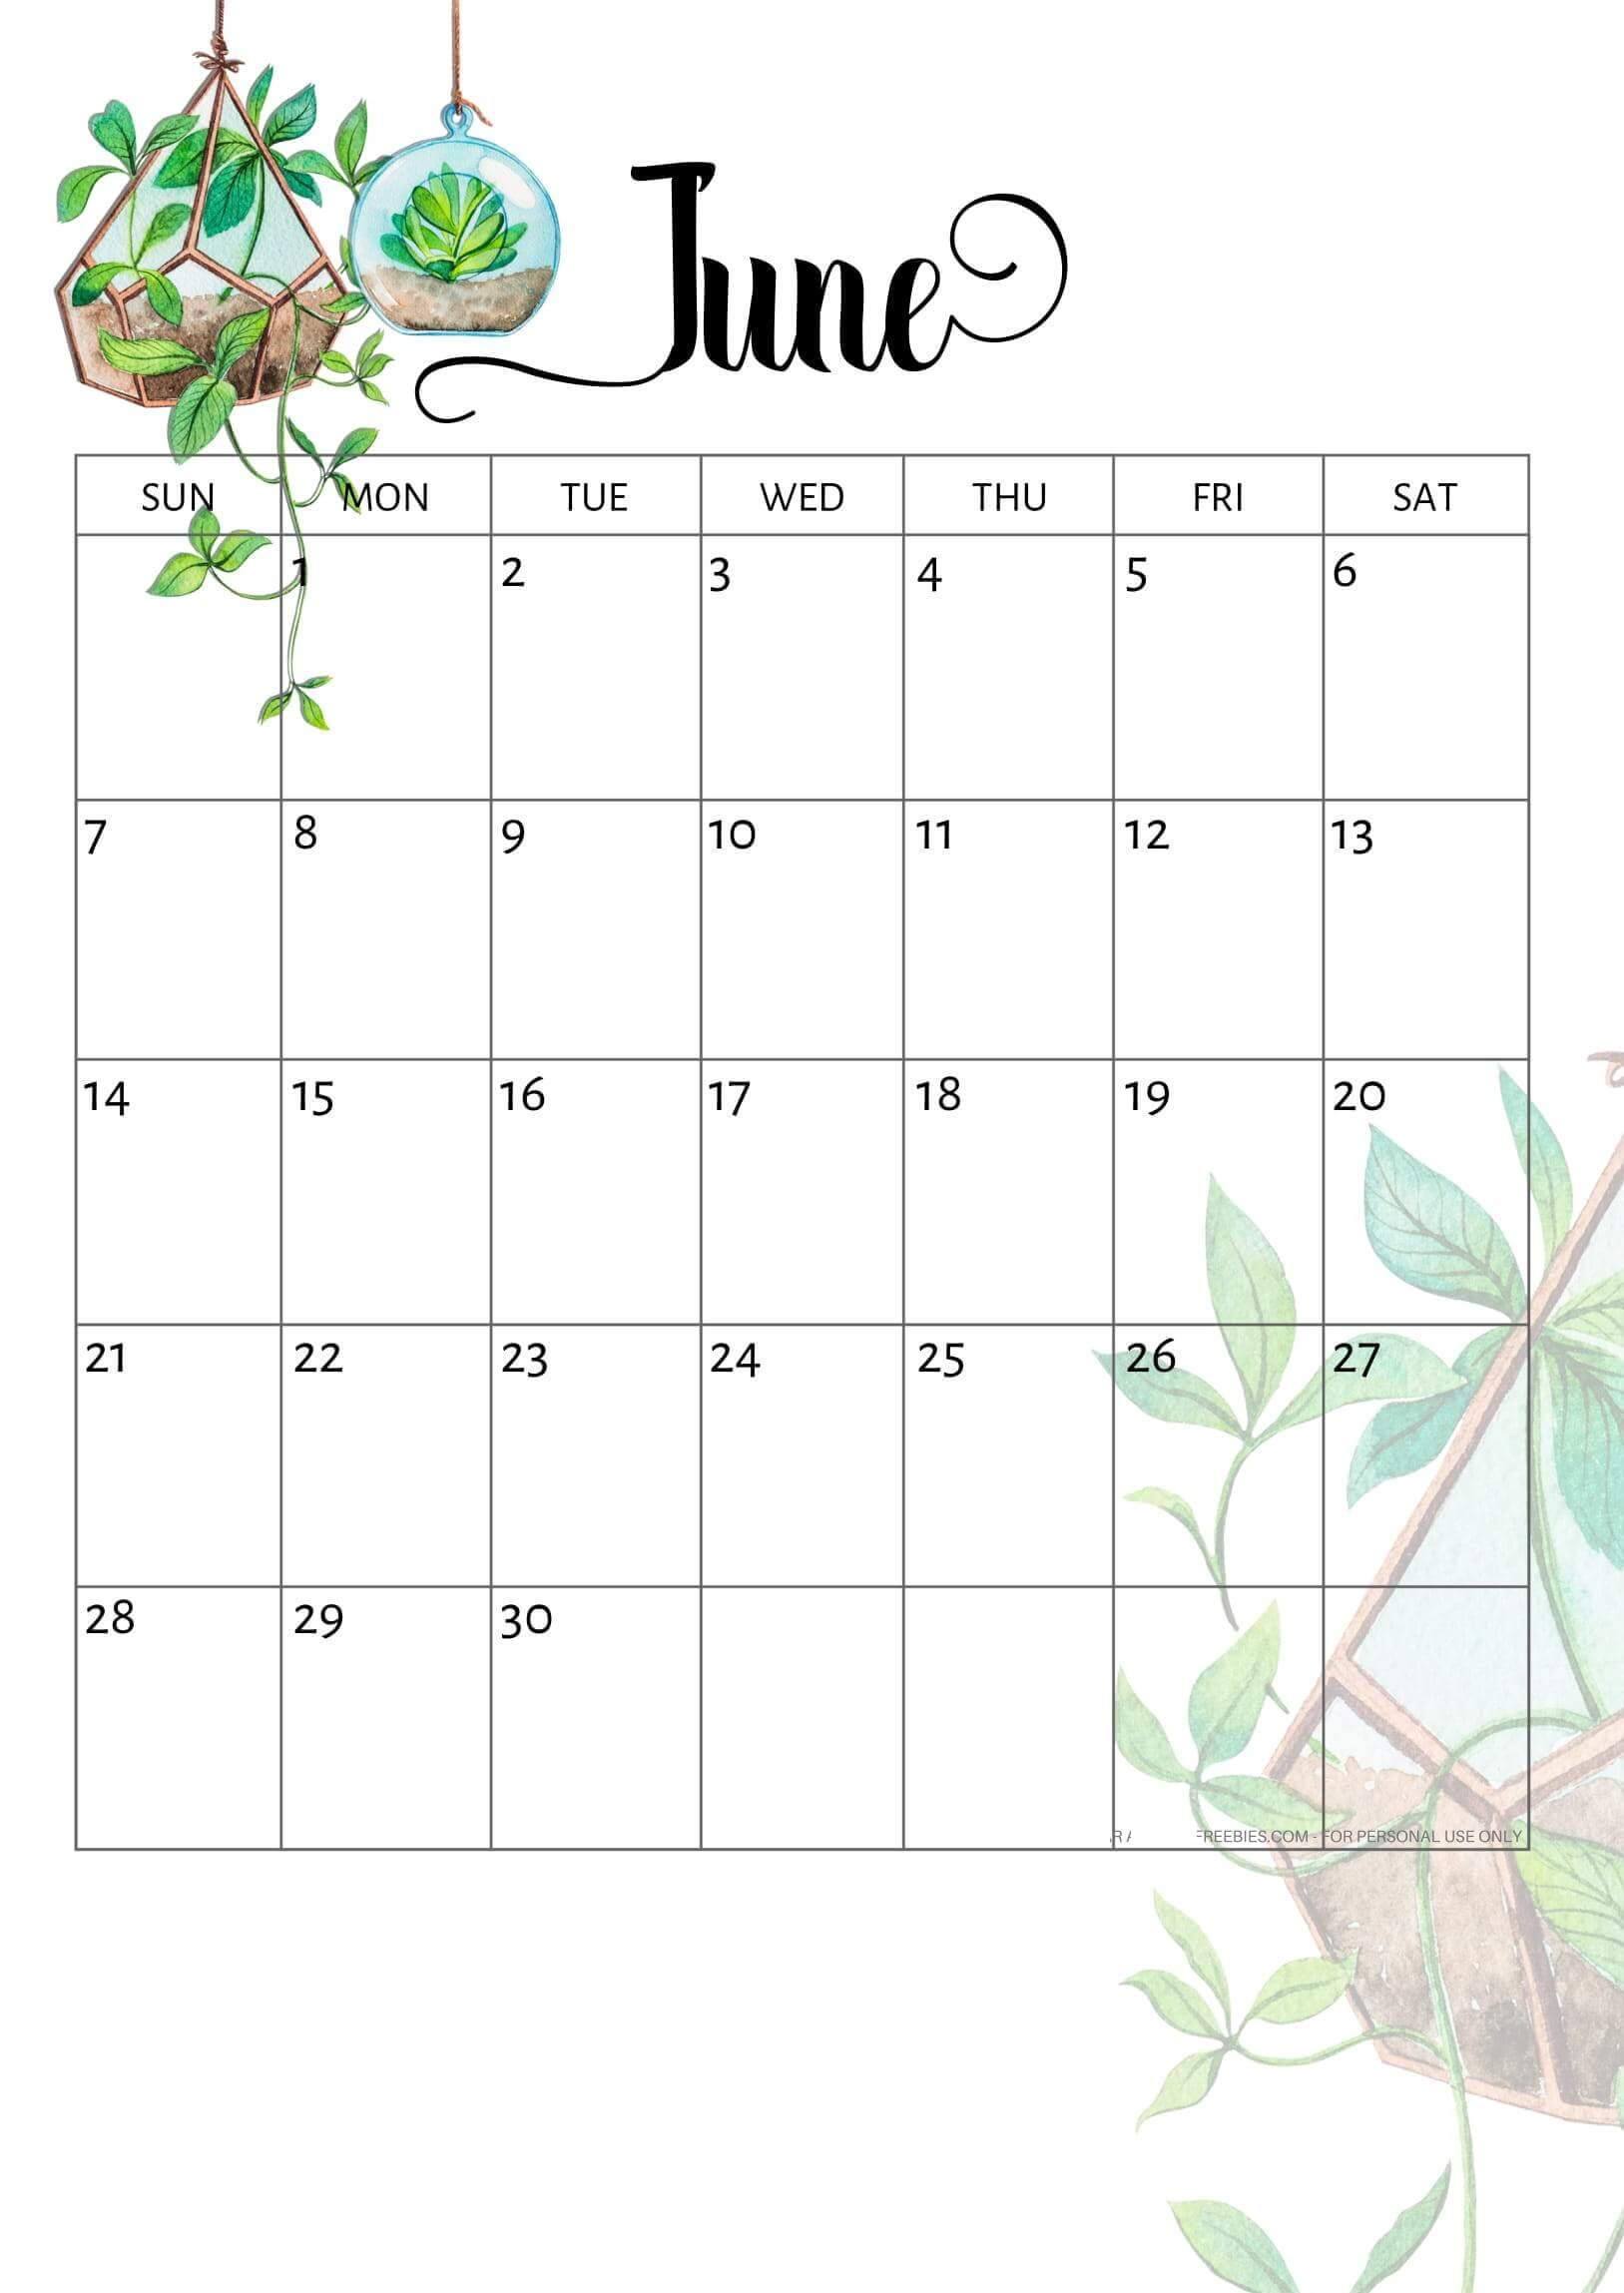 June 2020 Calendar Wallpapers - Top Free June 2020 Calendar Backgrounds ...